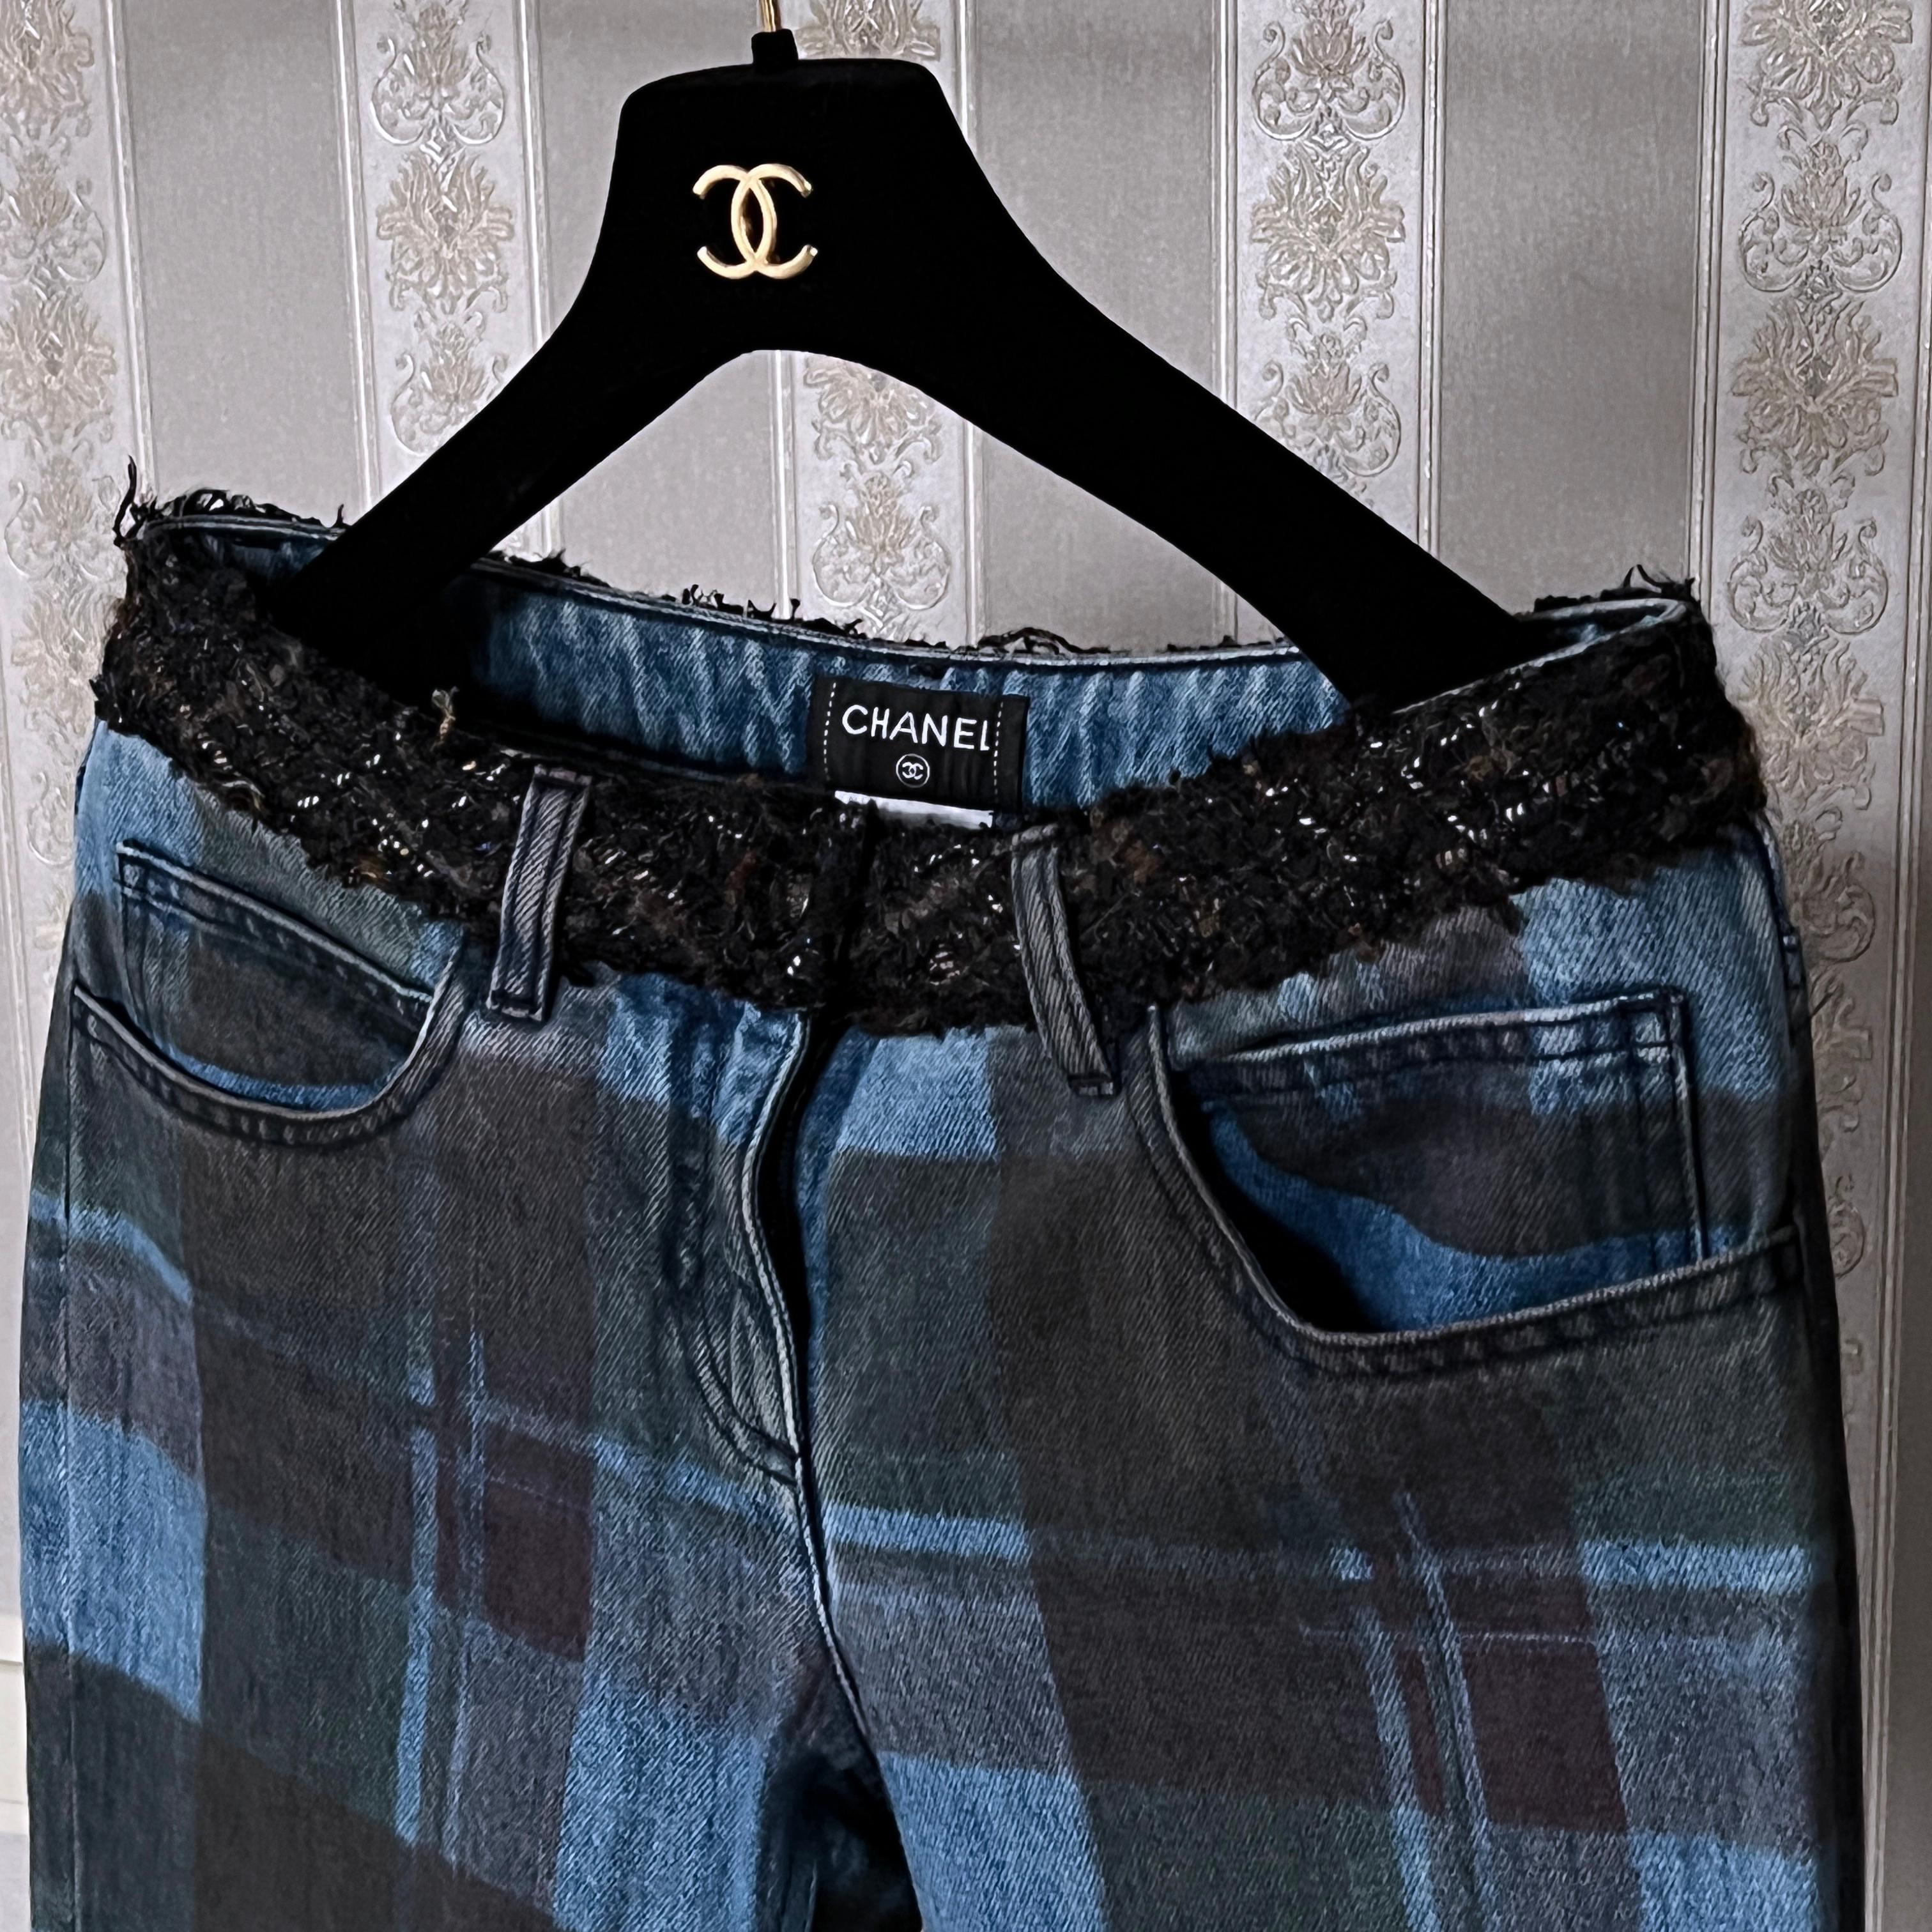 Chanel Edinburgh Tartan Blue Runway Jeans 4